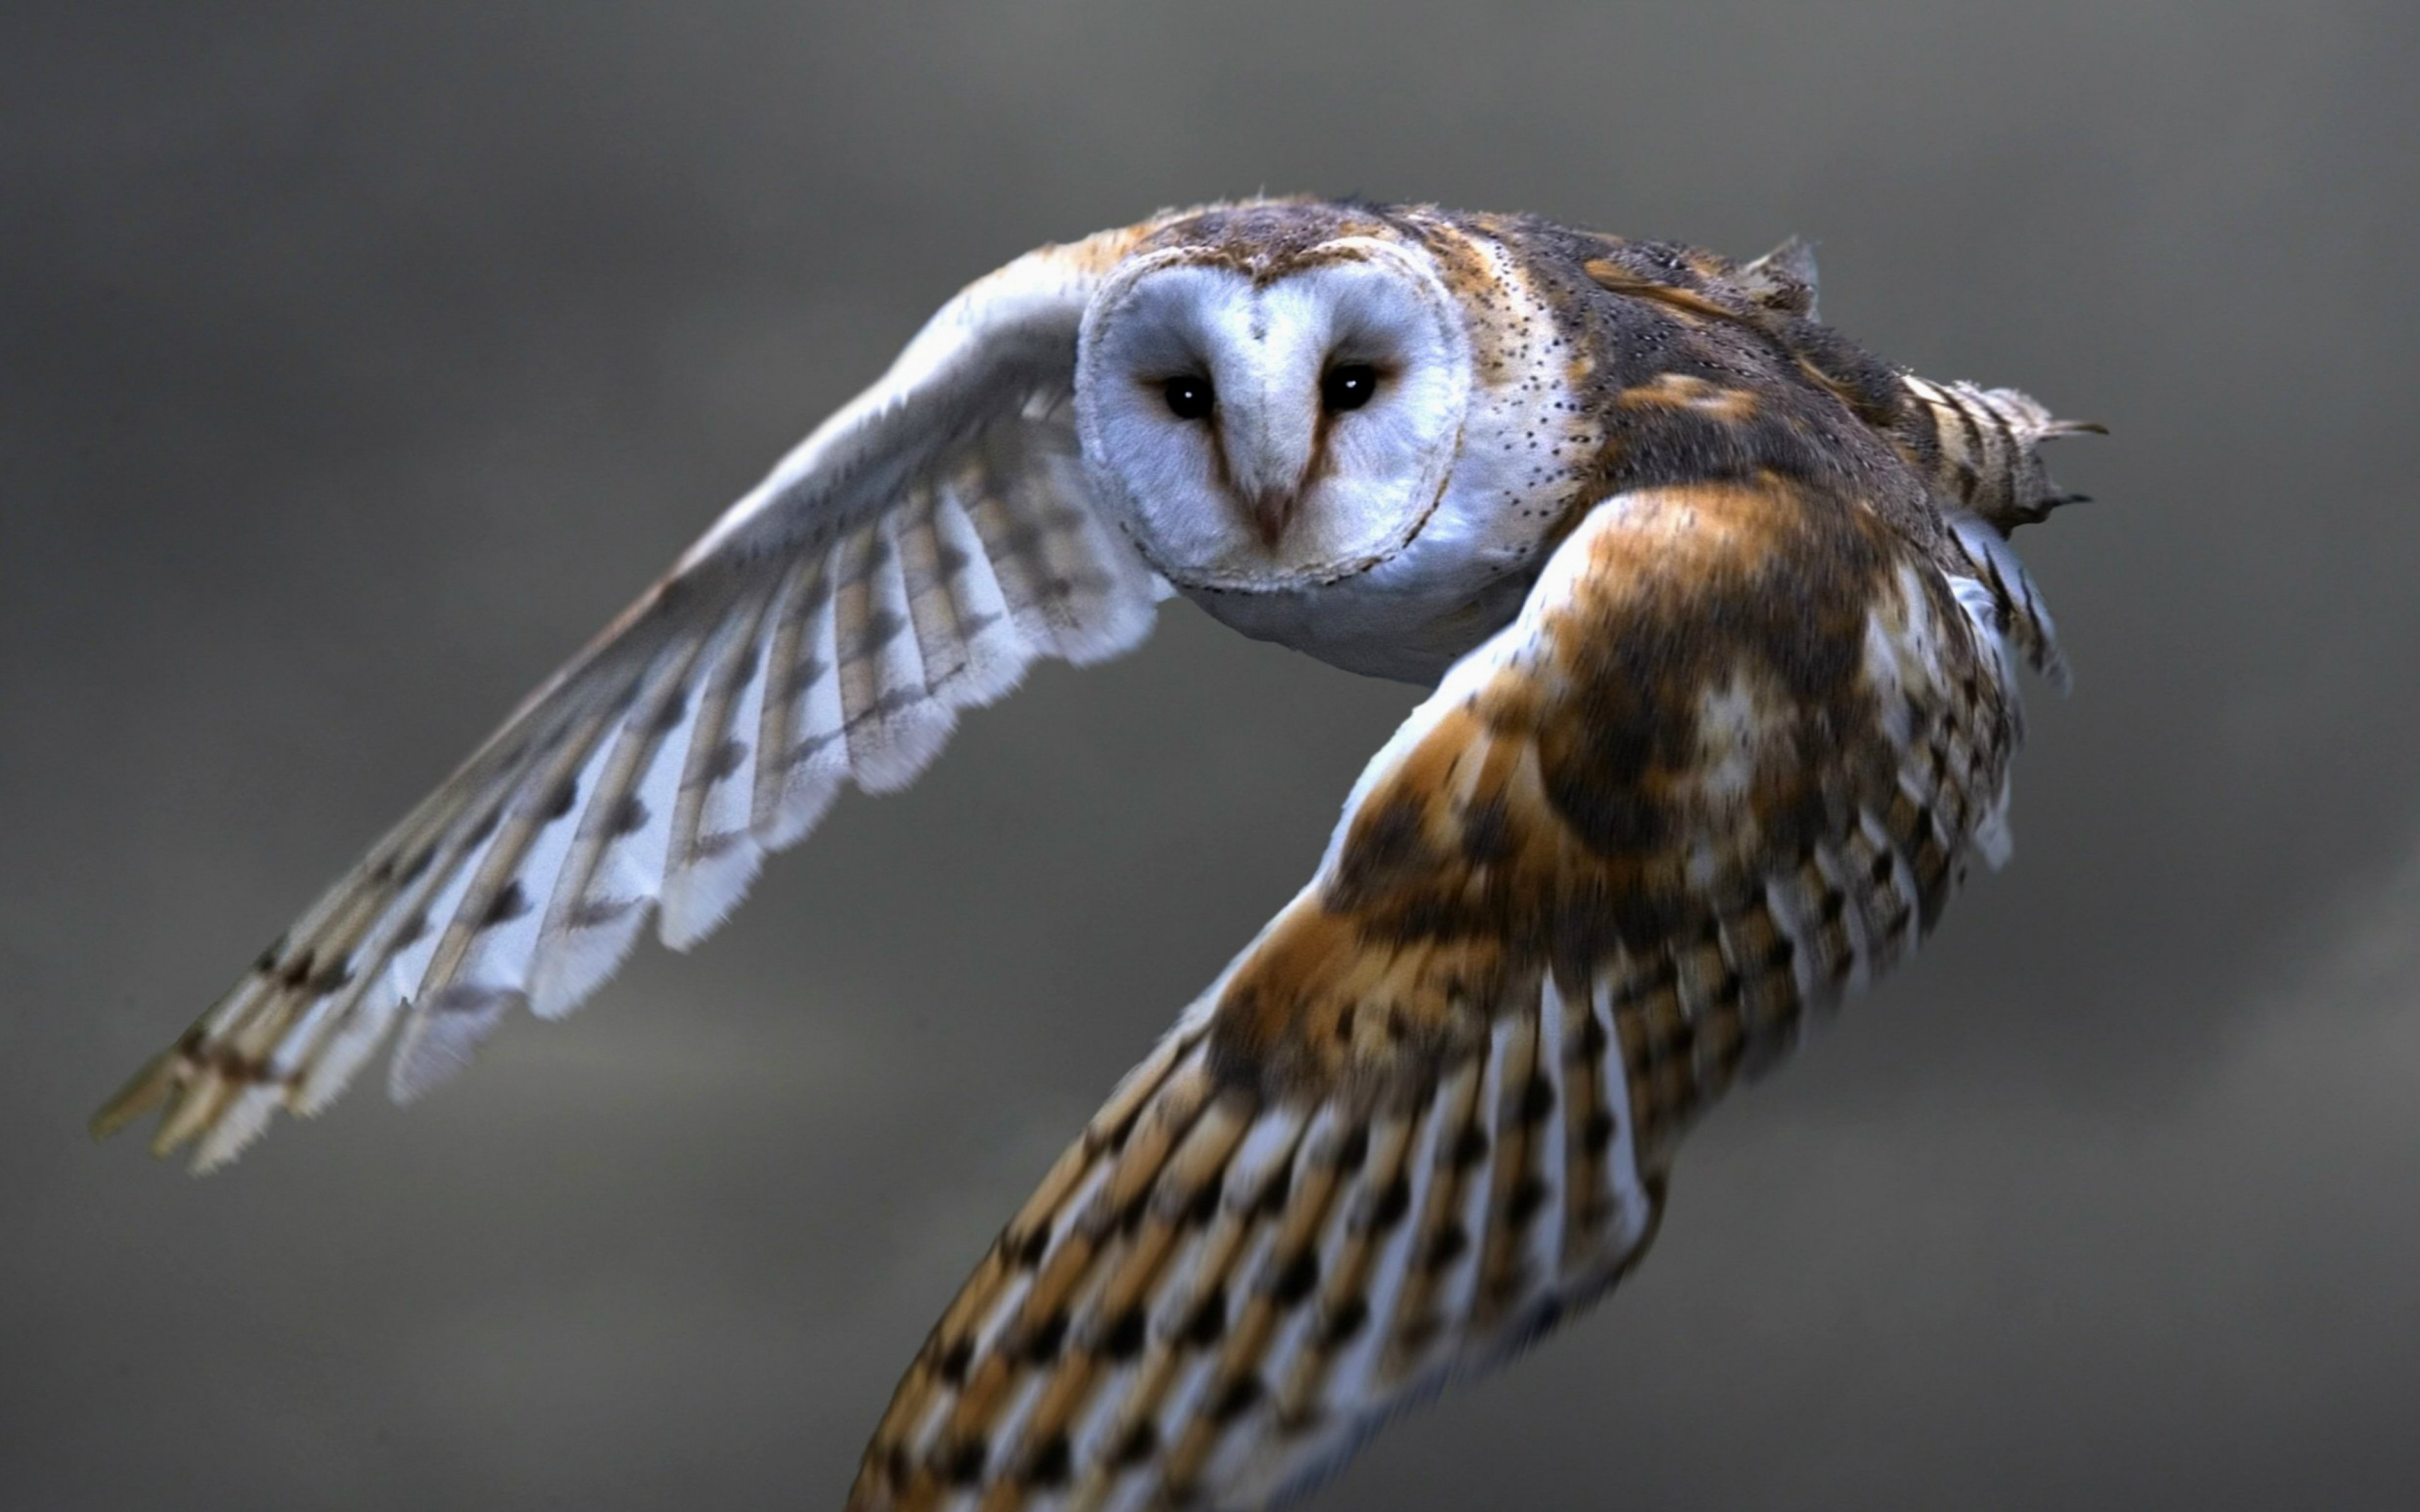 Wallpaper 3840x2400 Owl Barn owl Flying Bird Predator Ultra HD 4K 3840x2400